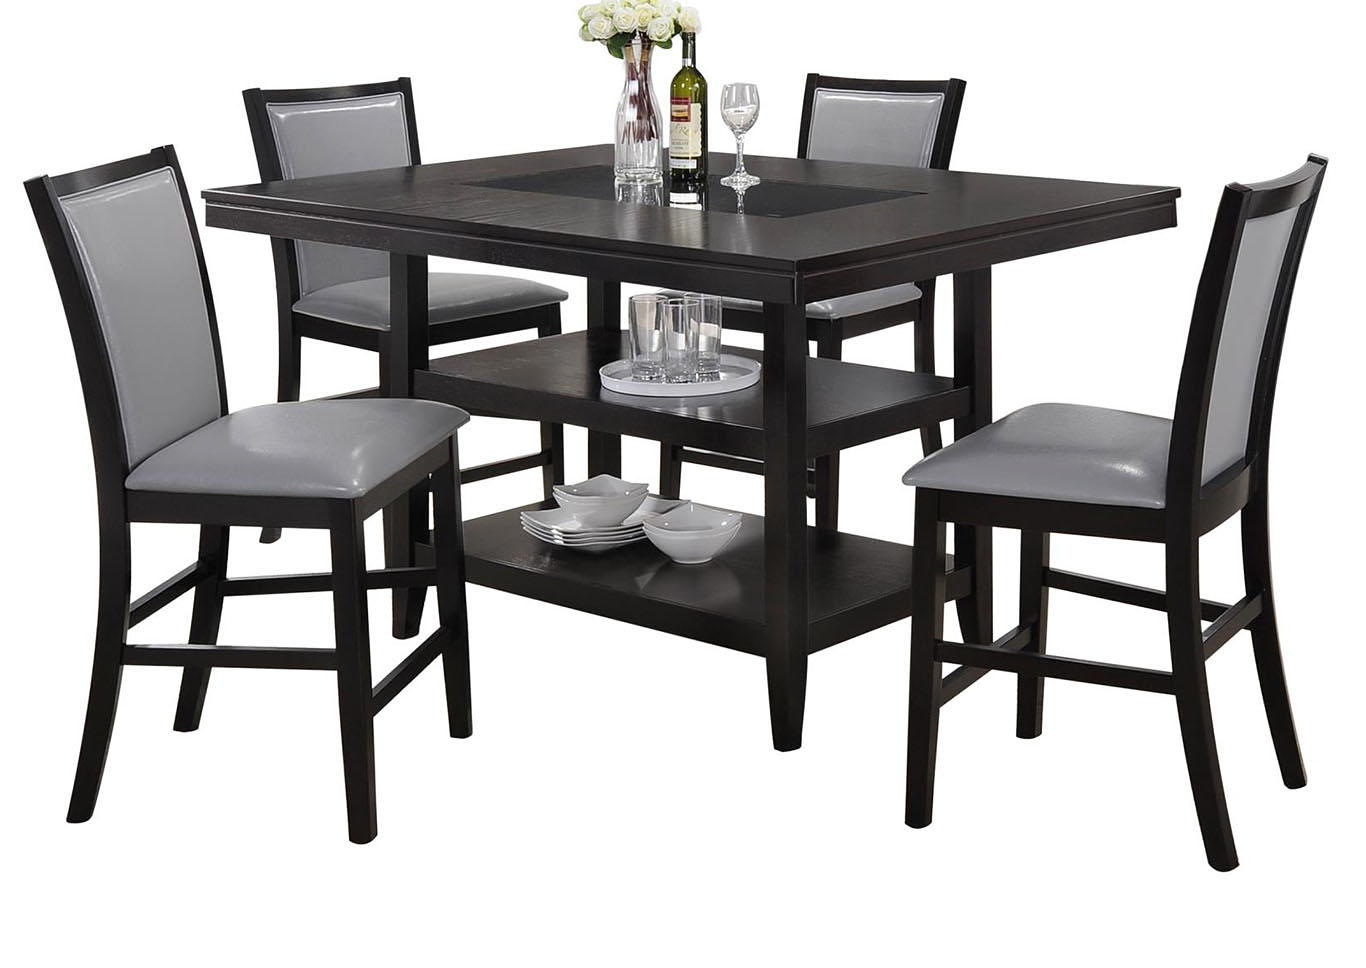 Grazia Black Gray 5 Pc Counter Height Table Set U And U Home Budget Furniture